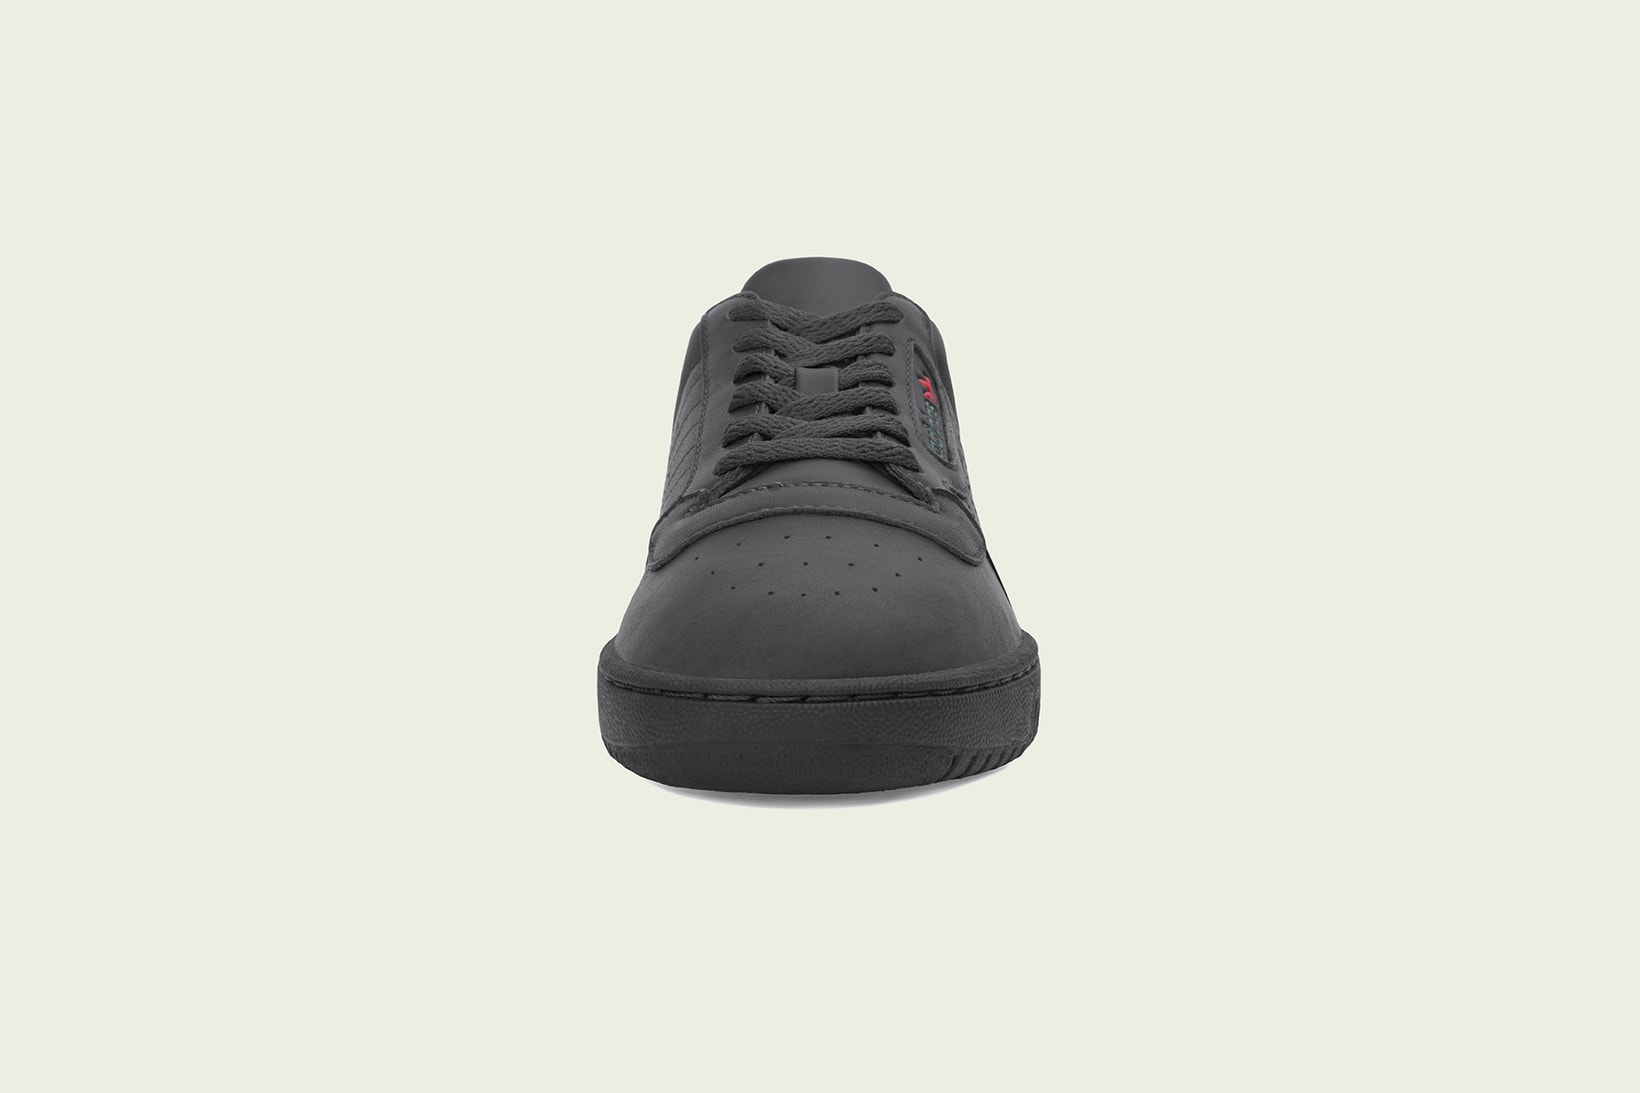 adidas YEEZY Powerphase Core Black Kanye West footwear release dates march 2018